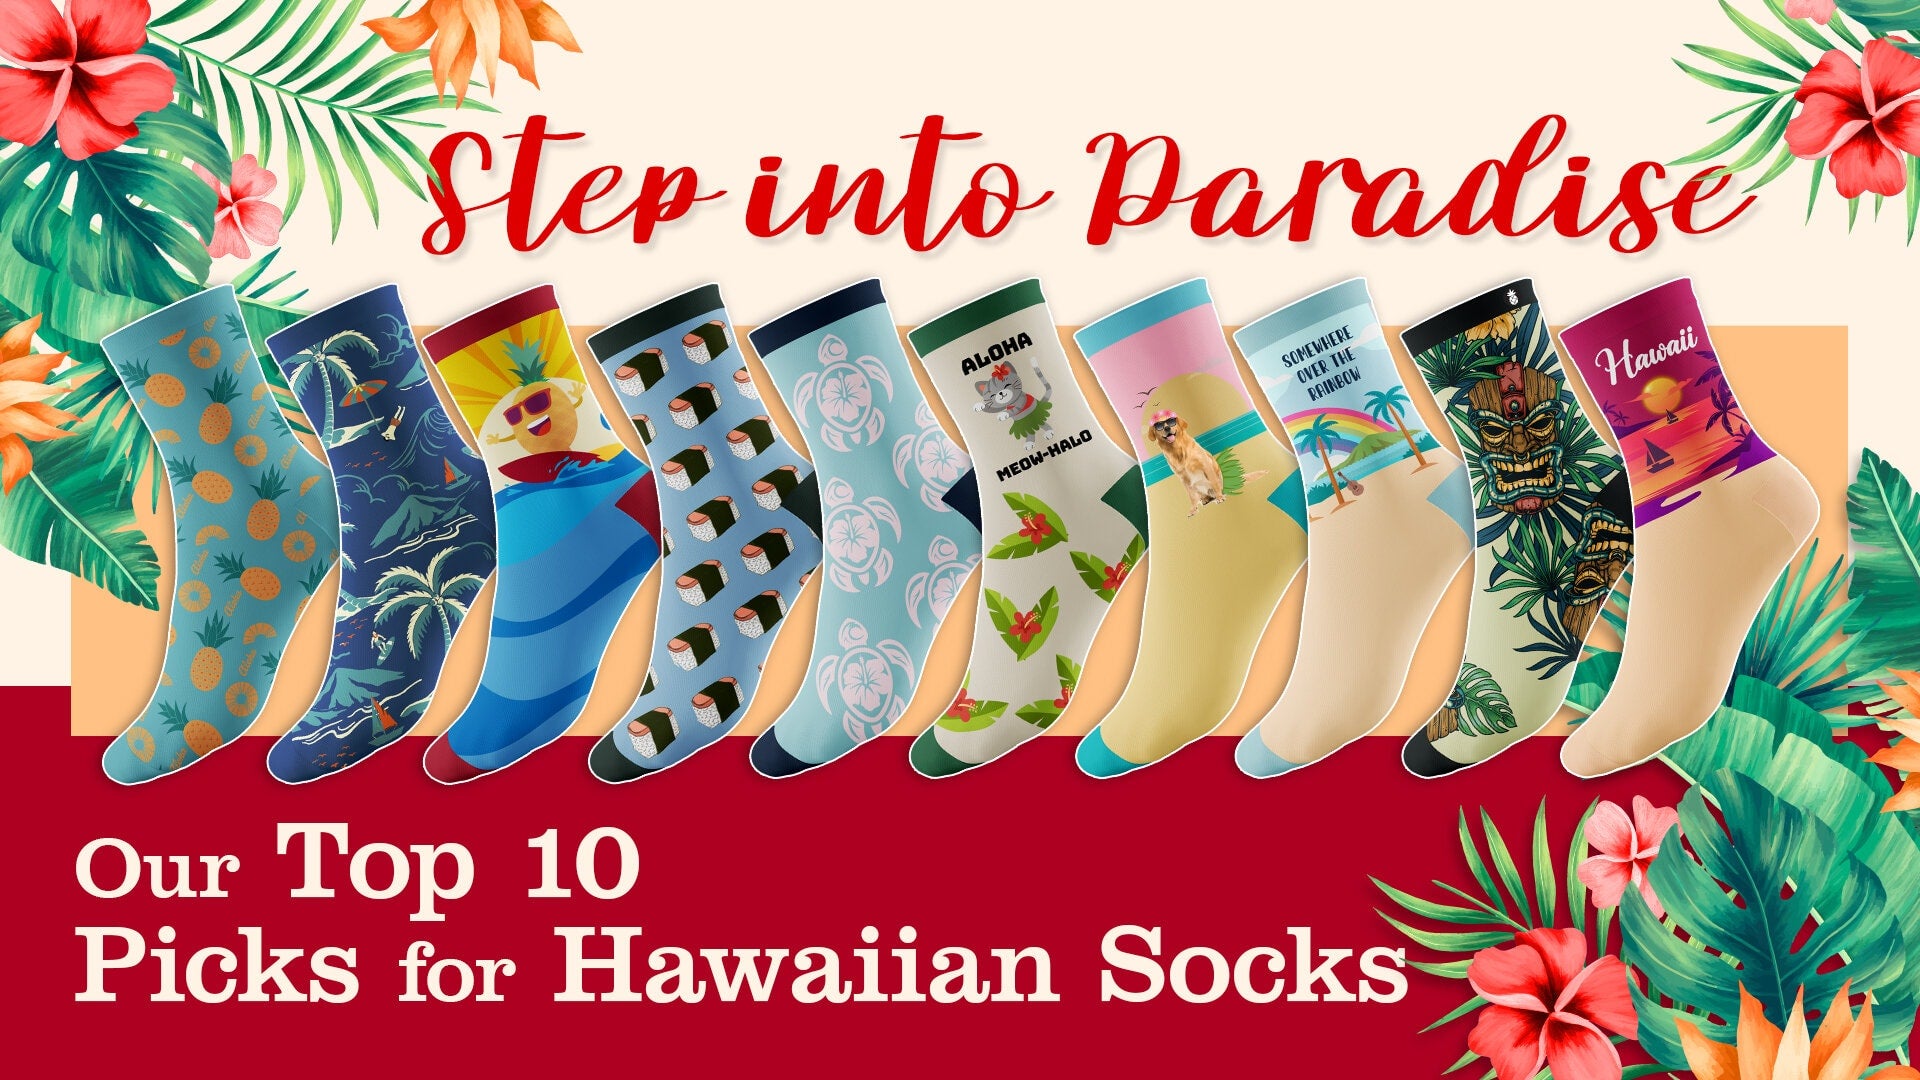 Step into Paradise - Our Top 10 Picks for Hawaiian Socks